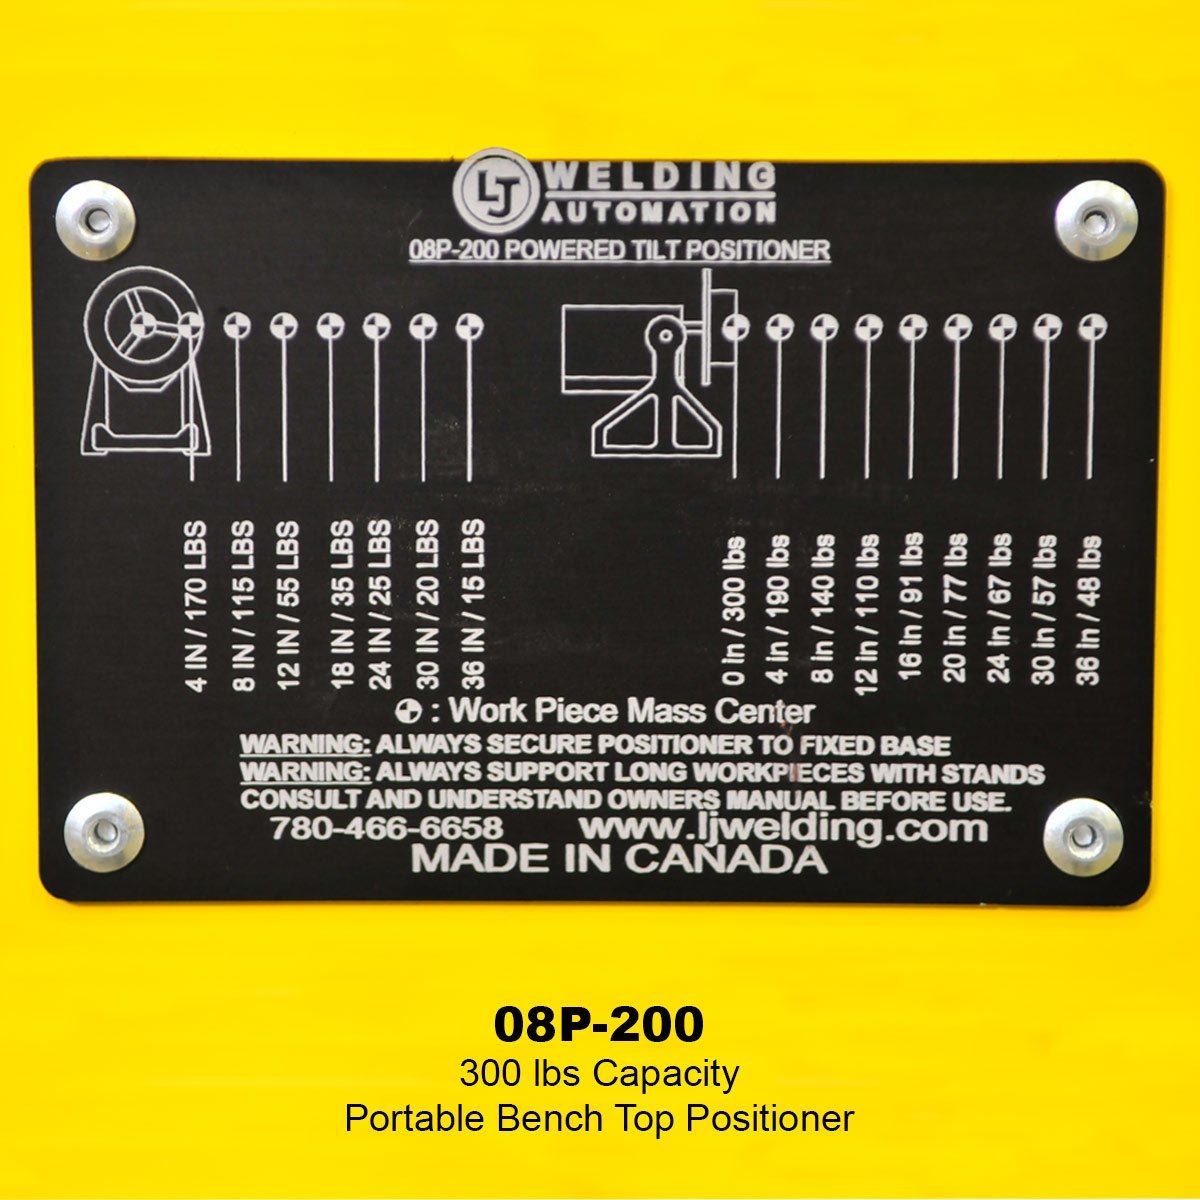 02-300lb-Portable-Bench-Top-Positioner